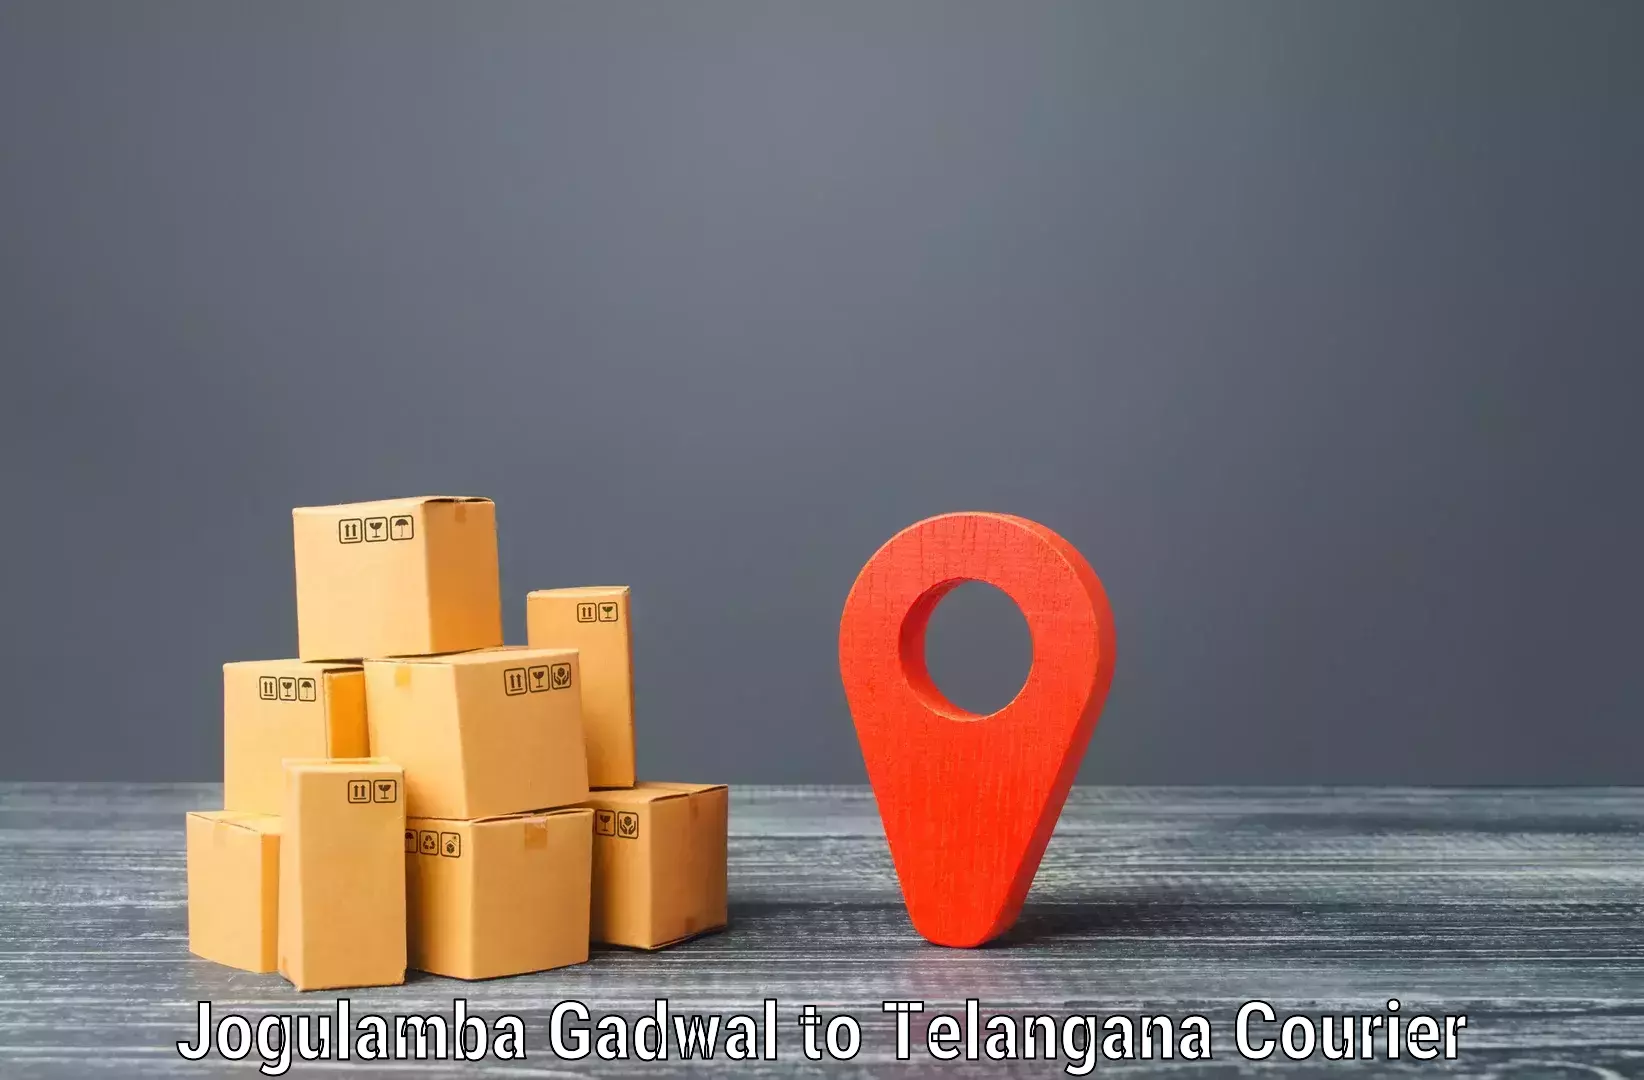 International parcel service Jogulamba Gadwal to Medak